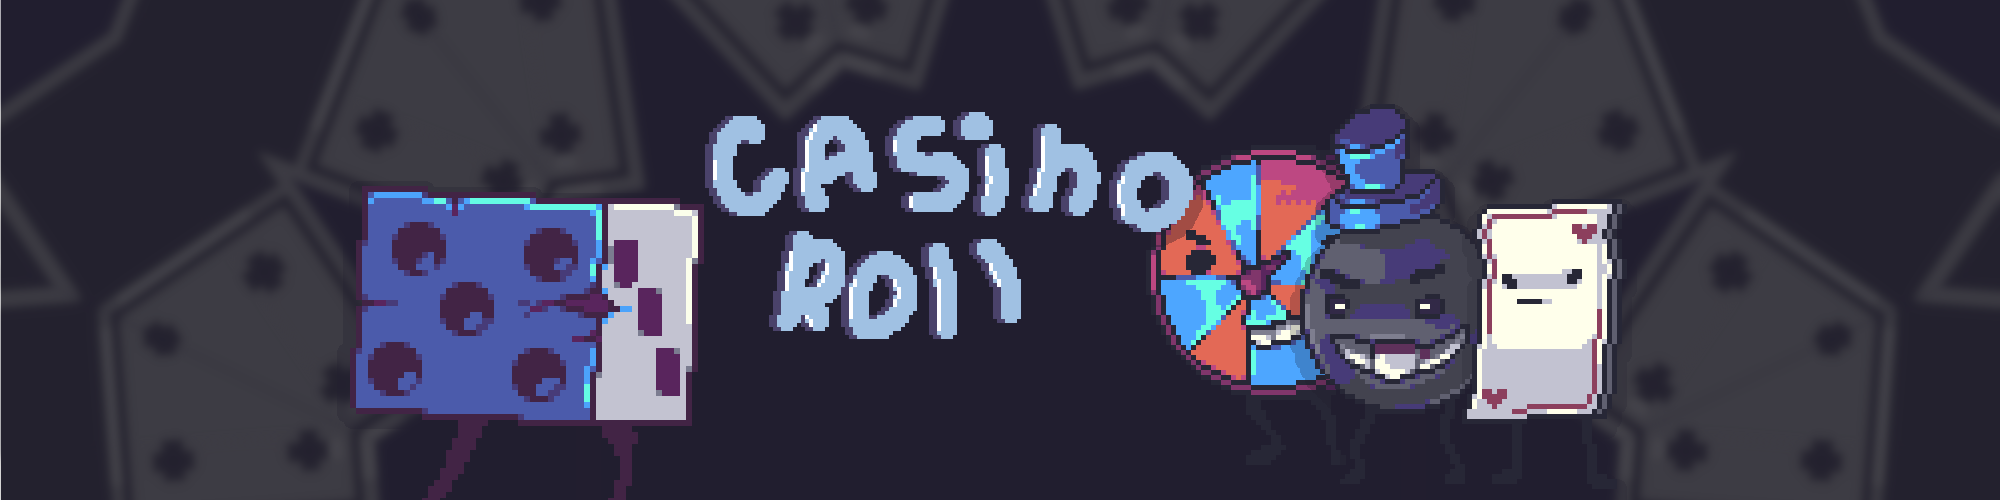 Casino Roll